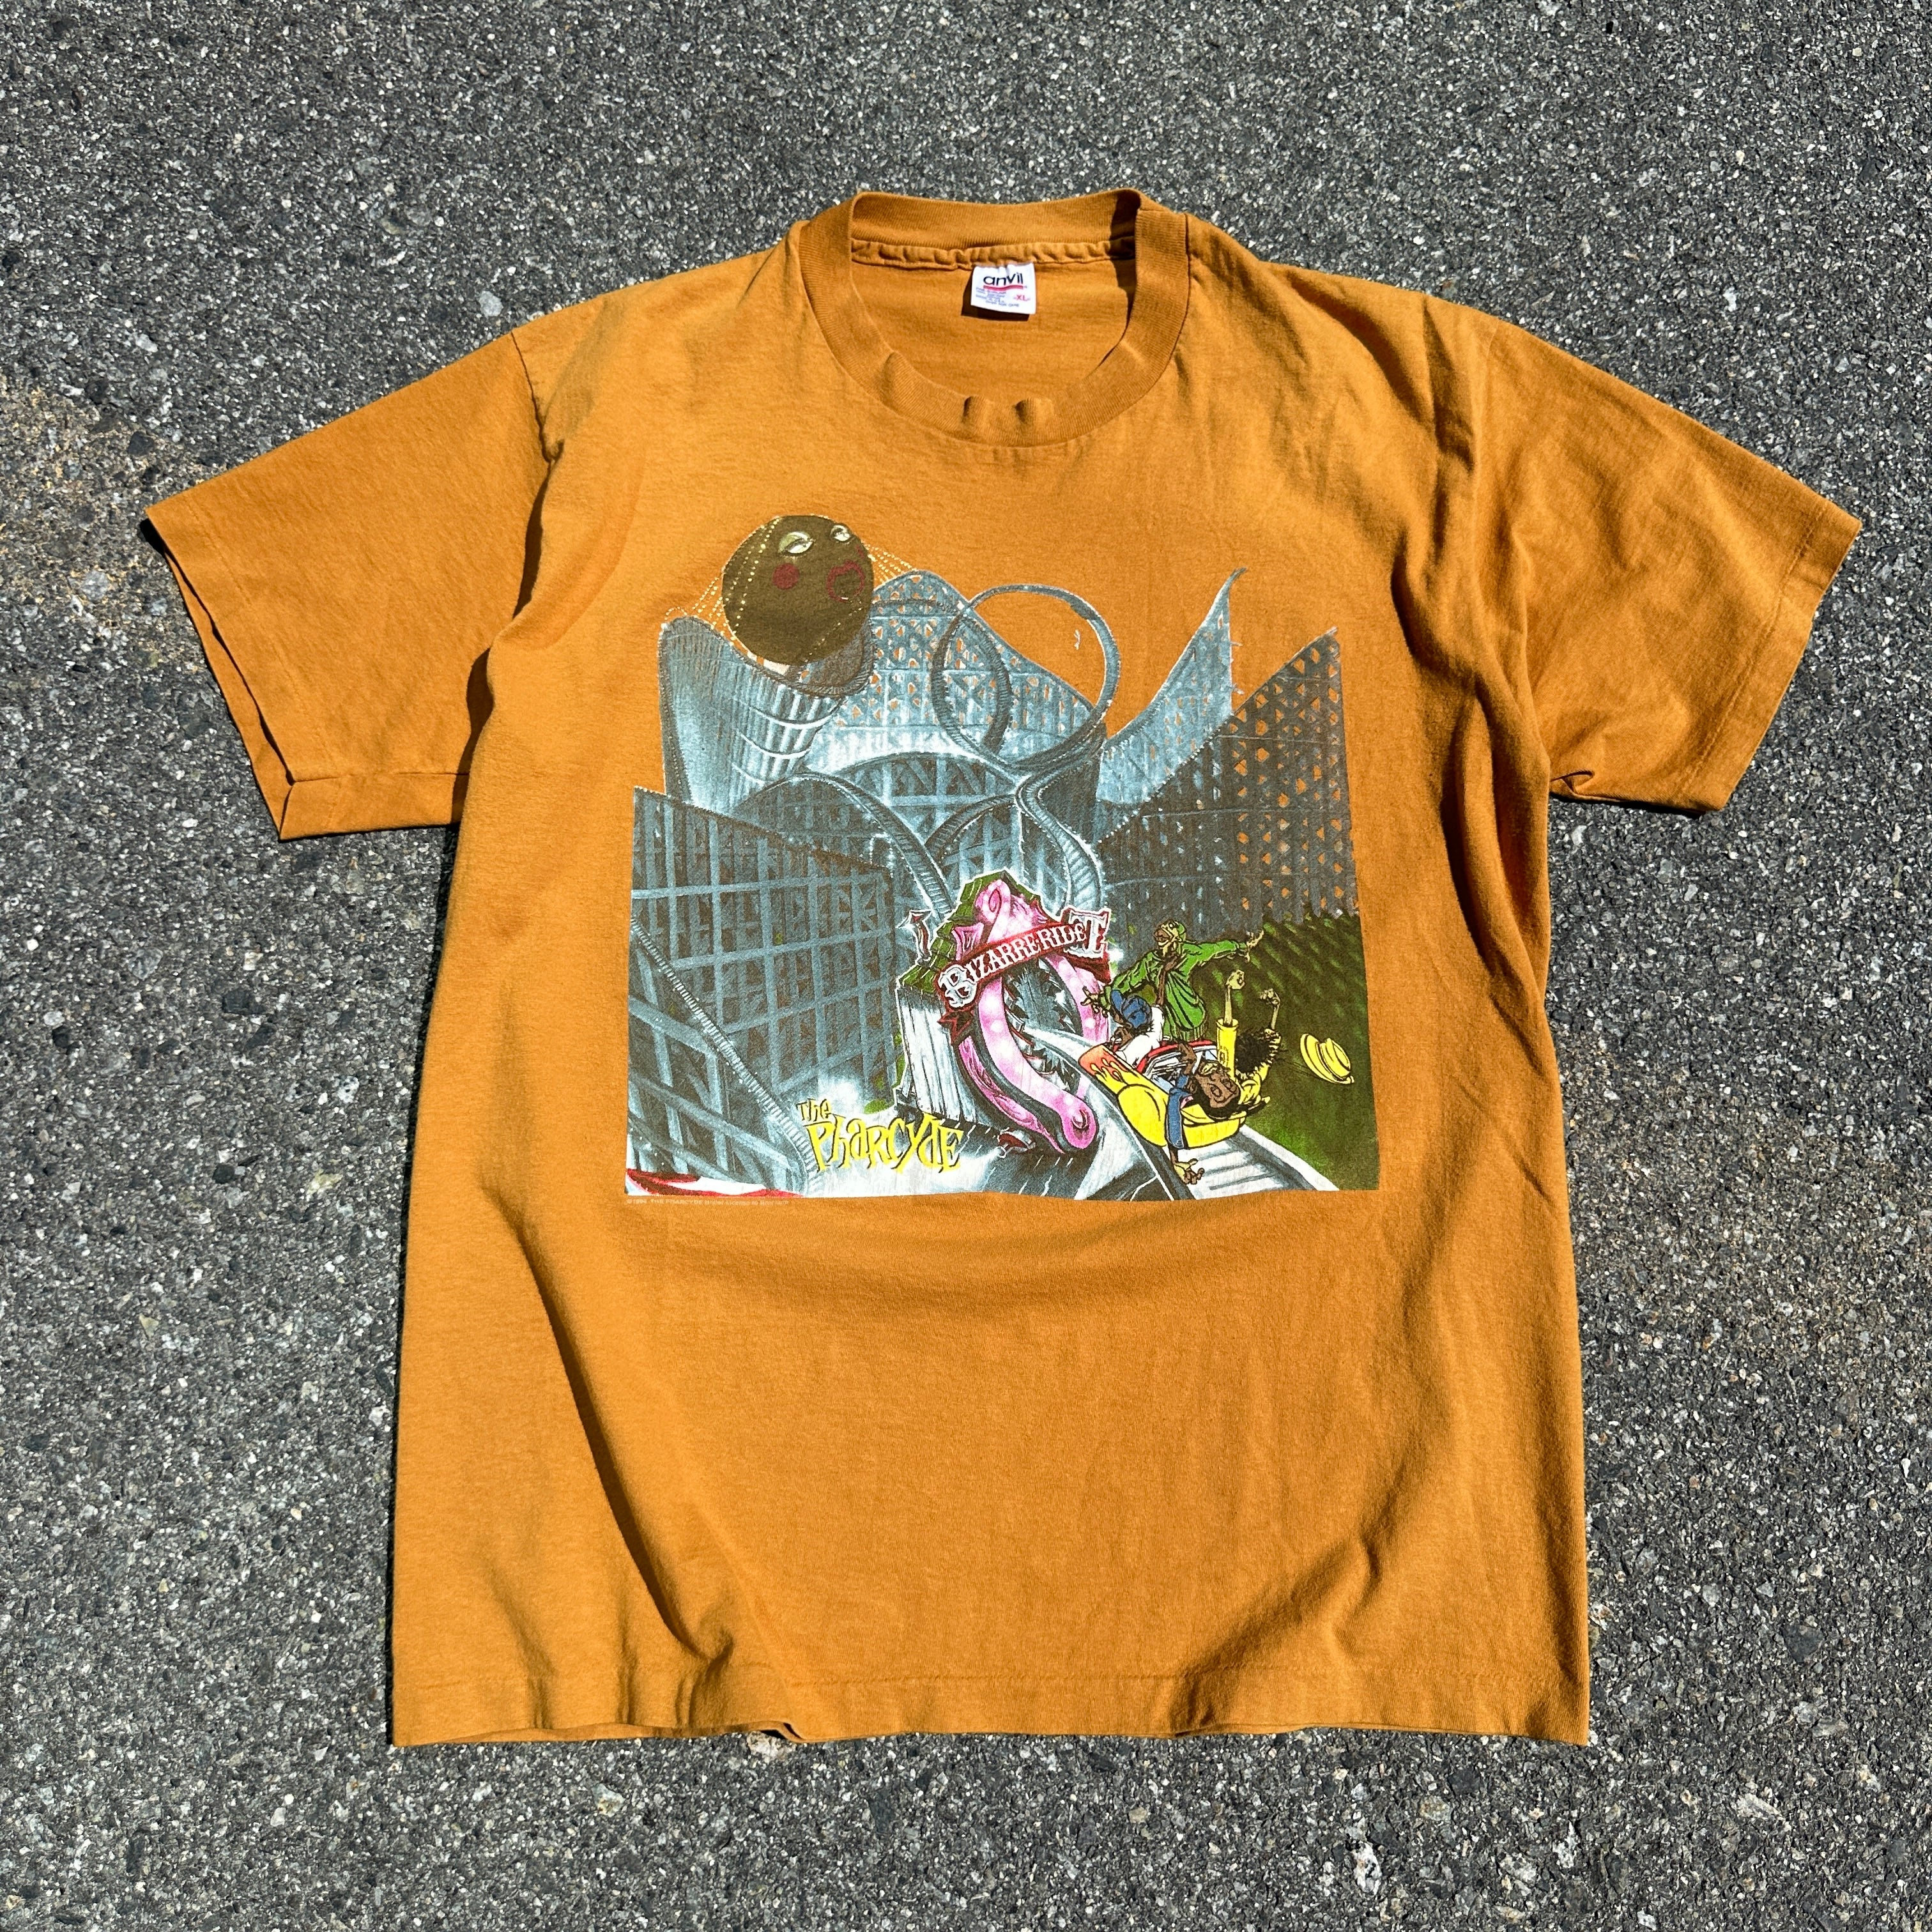 Vintage Pharcycde Rap T-shirt Bizarre Ride ll 1994